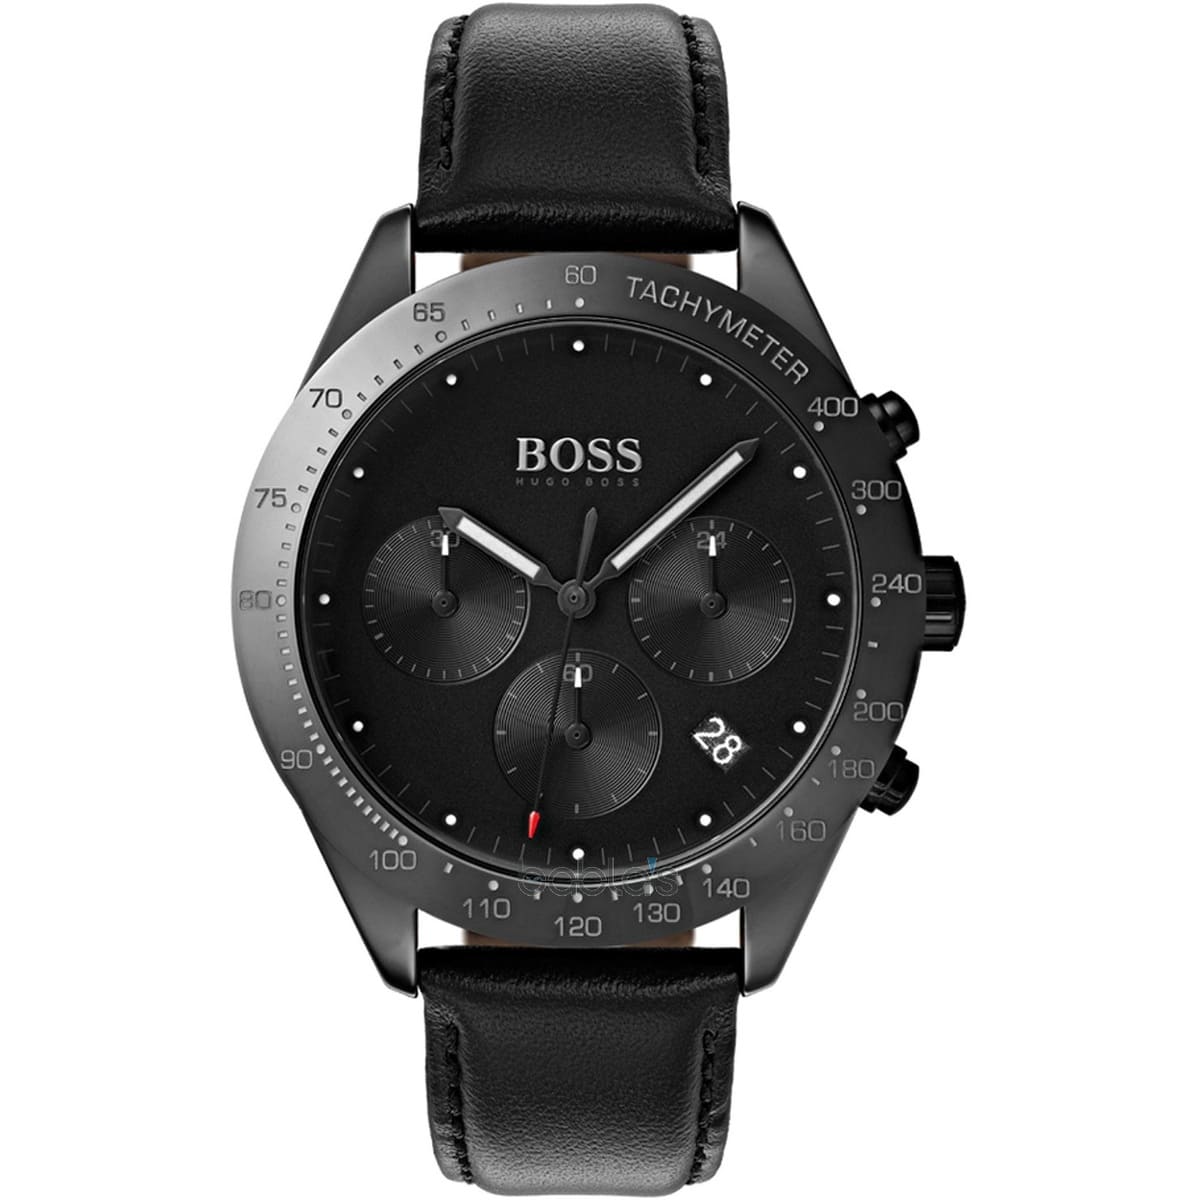 Часы хуго босс. Hugo Boss - HB 1513581. Часы Хьюго босс мужские. Часы Boss 1513581. Часы Hugo Boss мужские черные.